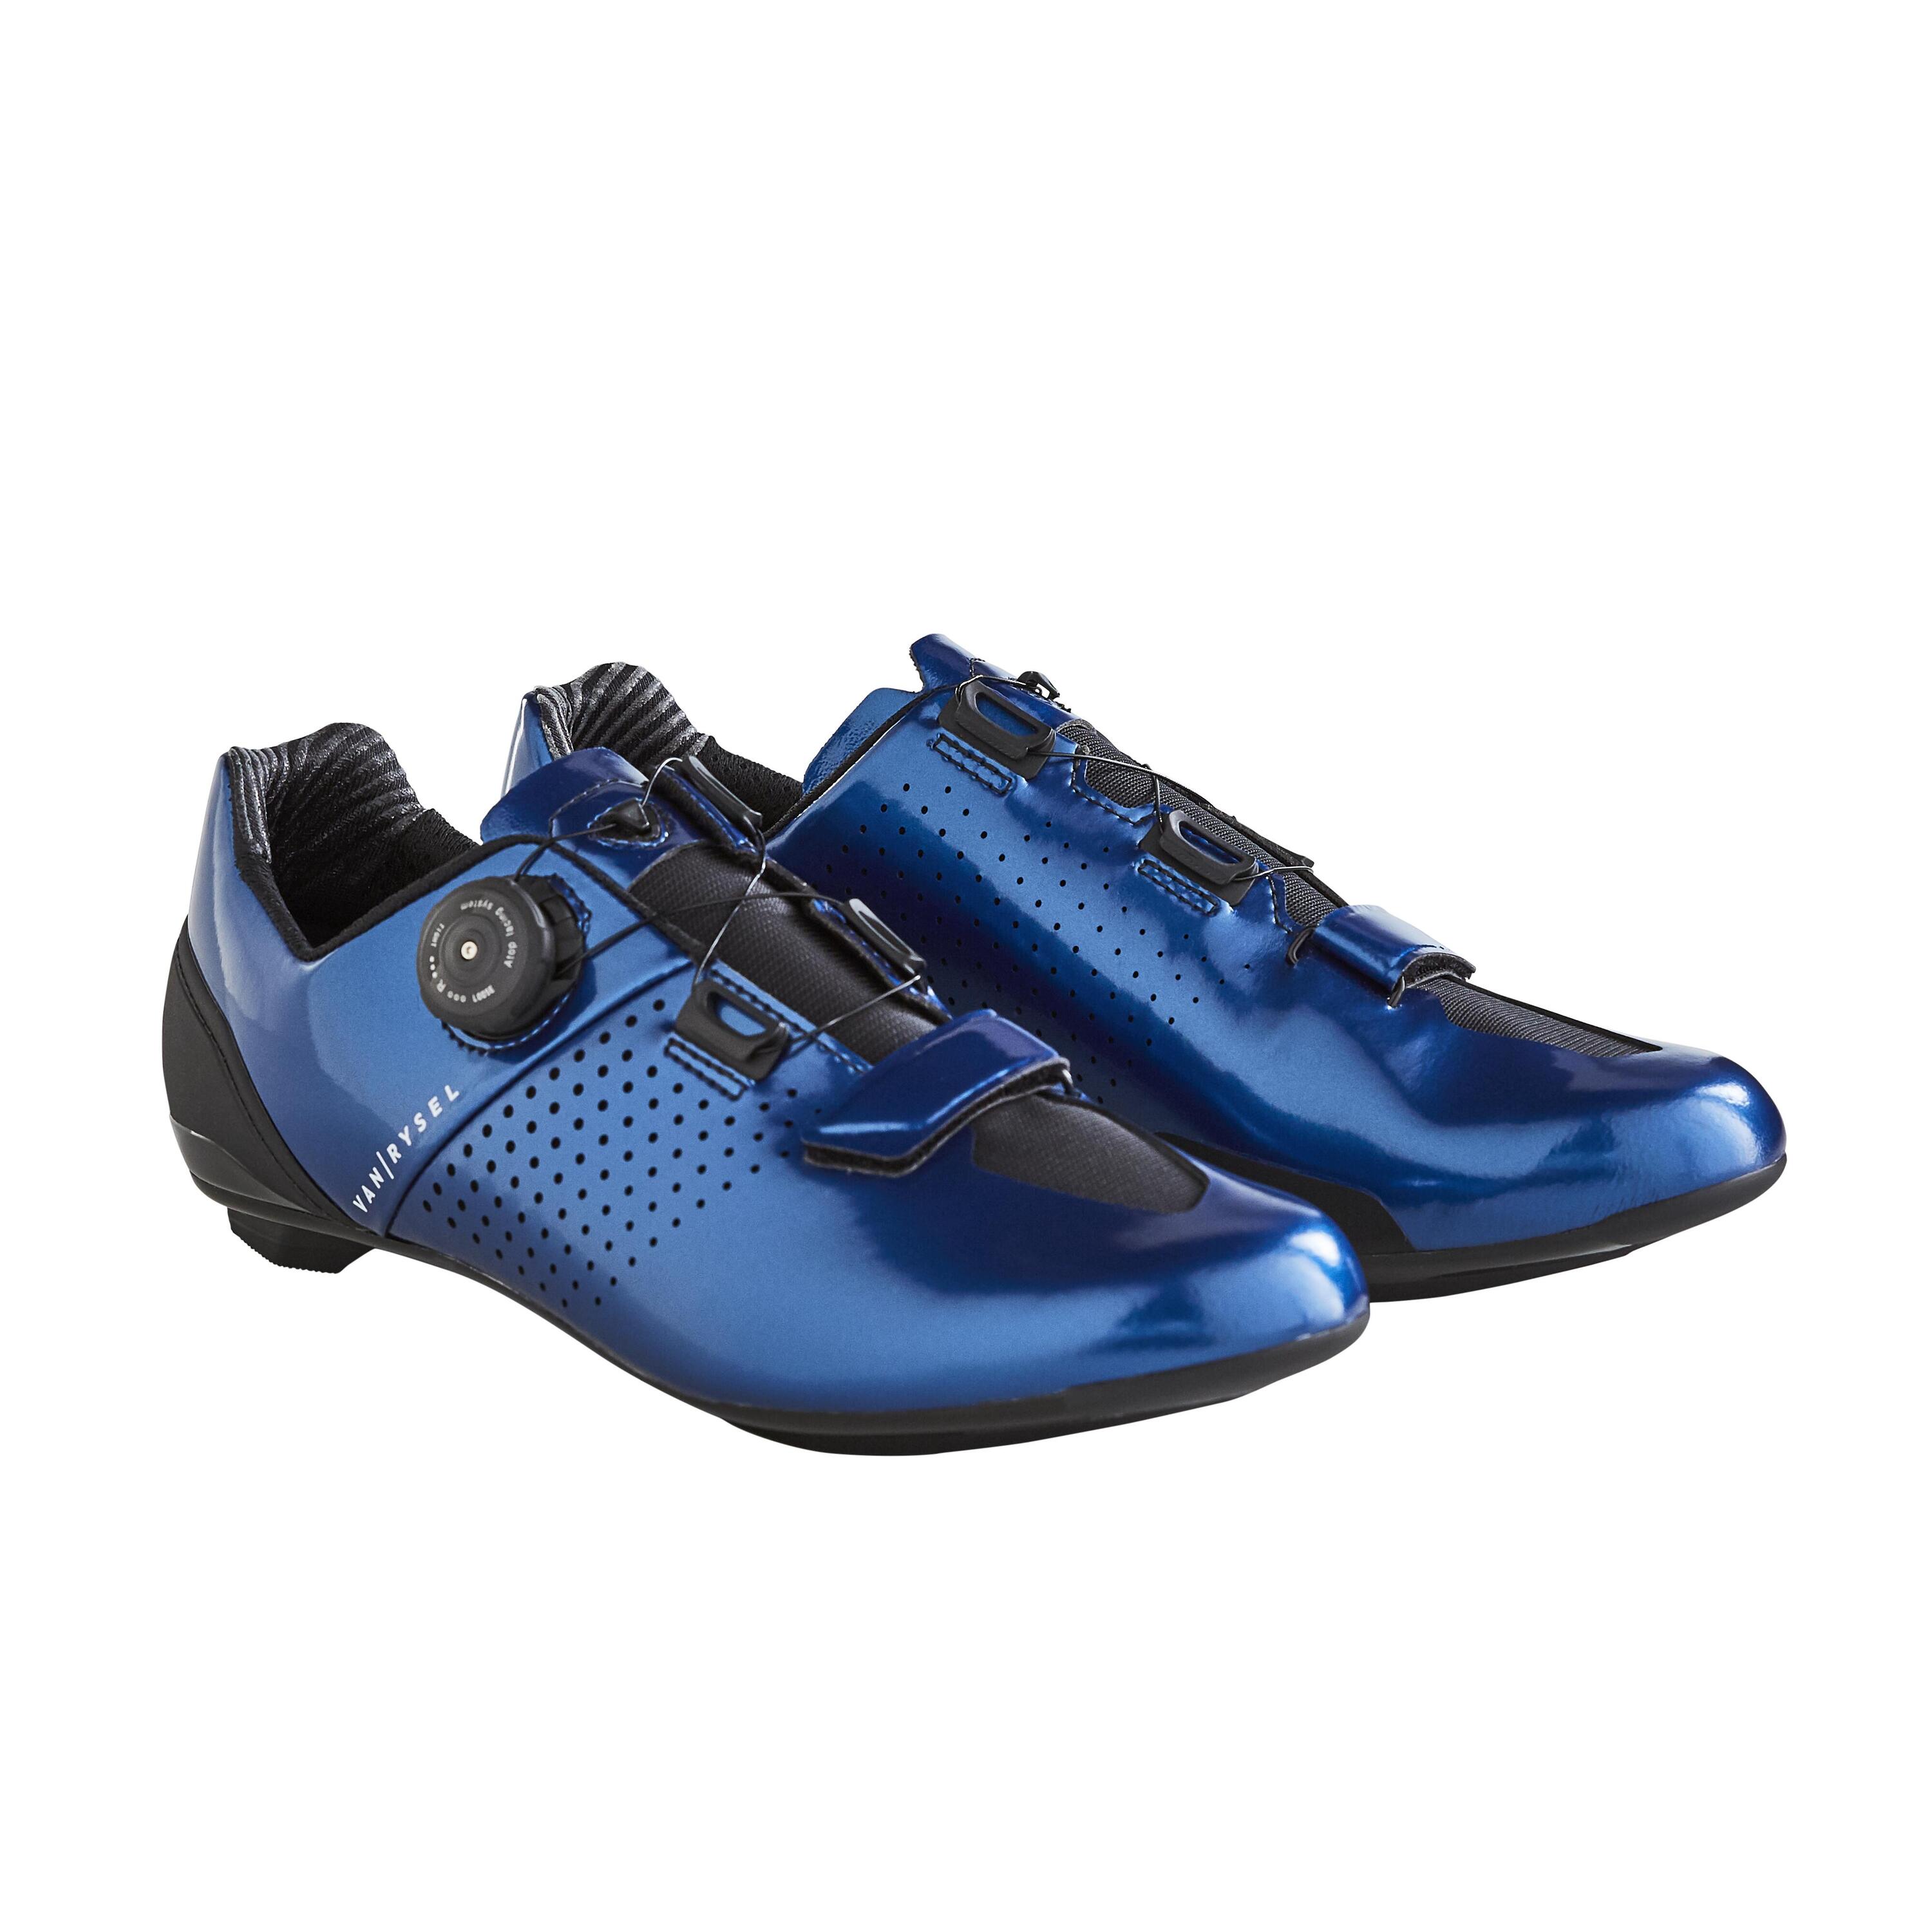 VAN RYSEL RoadR 520 Carbon Road Cycling Shoes - Blue